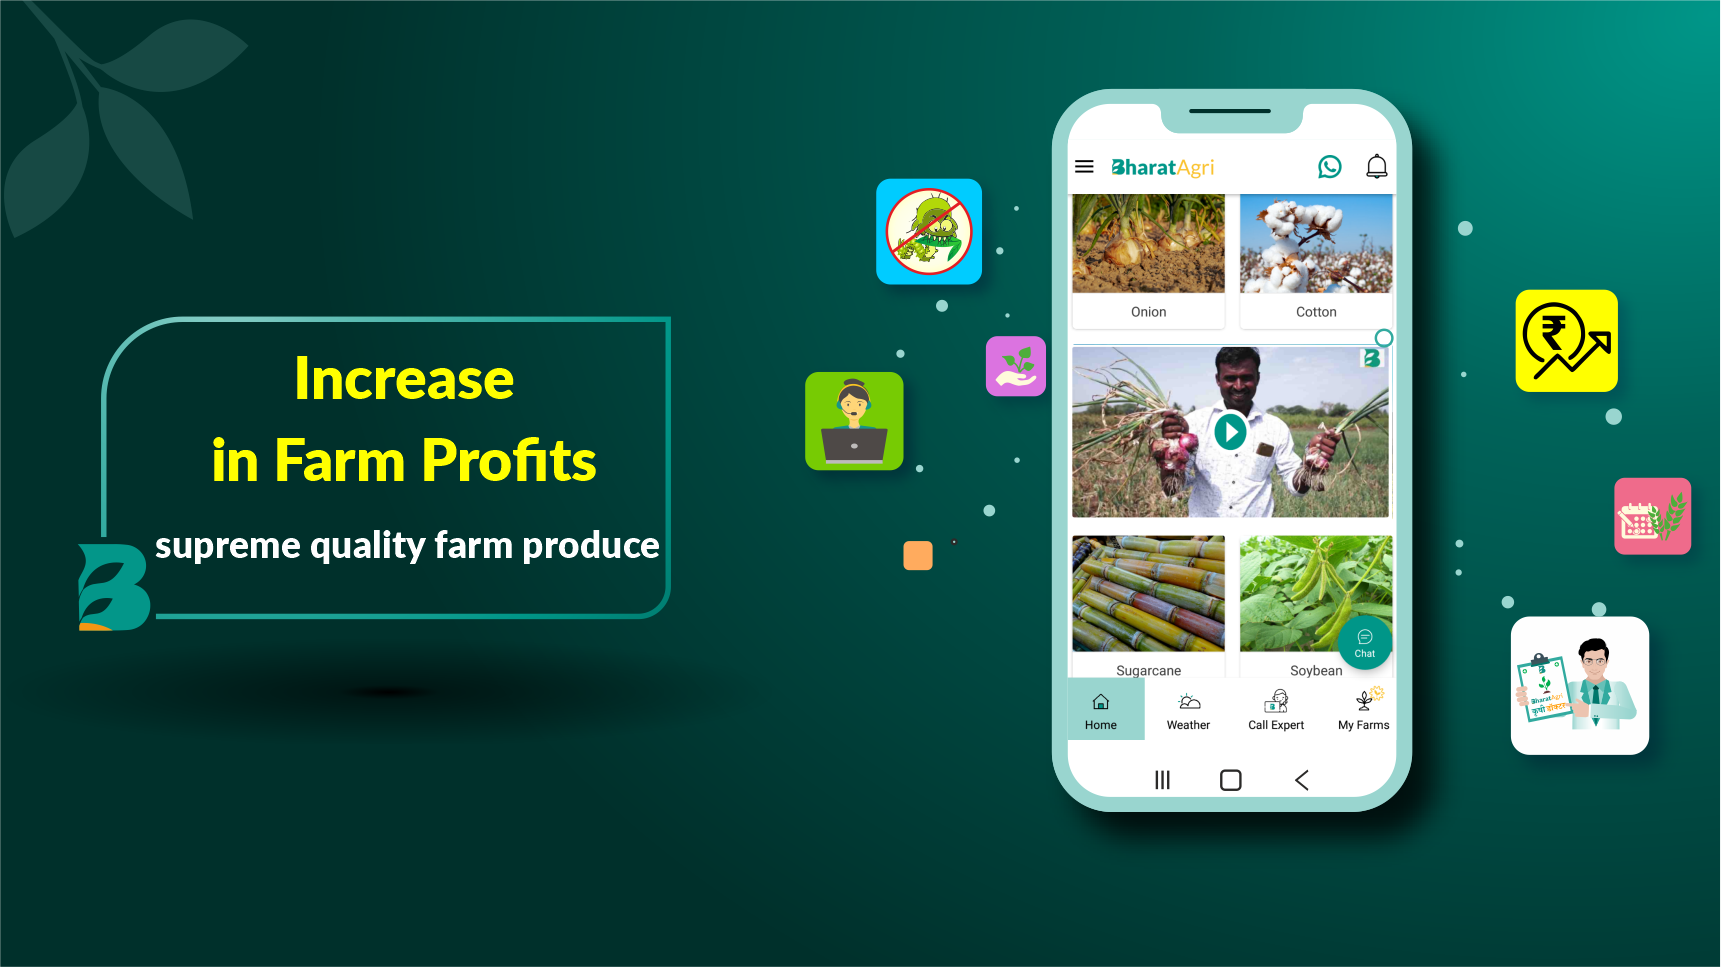 BharatAgri: Smart Farming, Agriculture Expert App